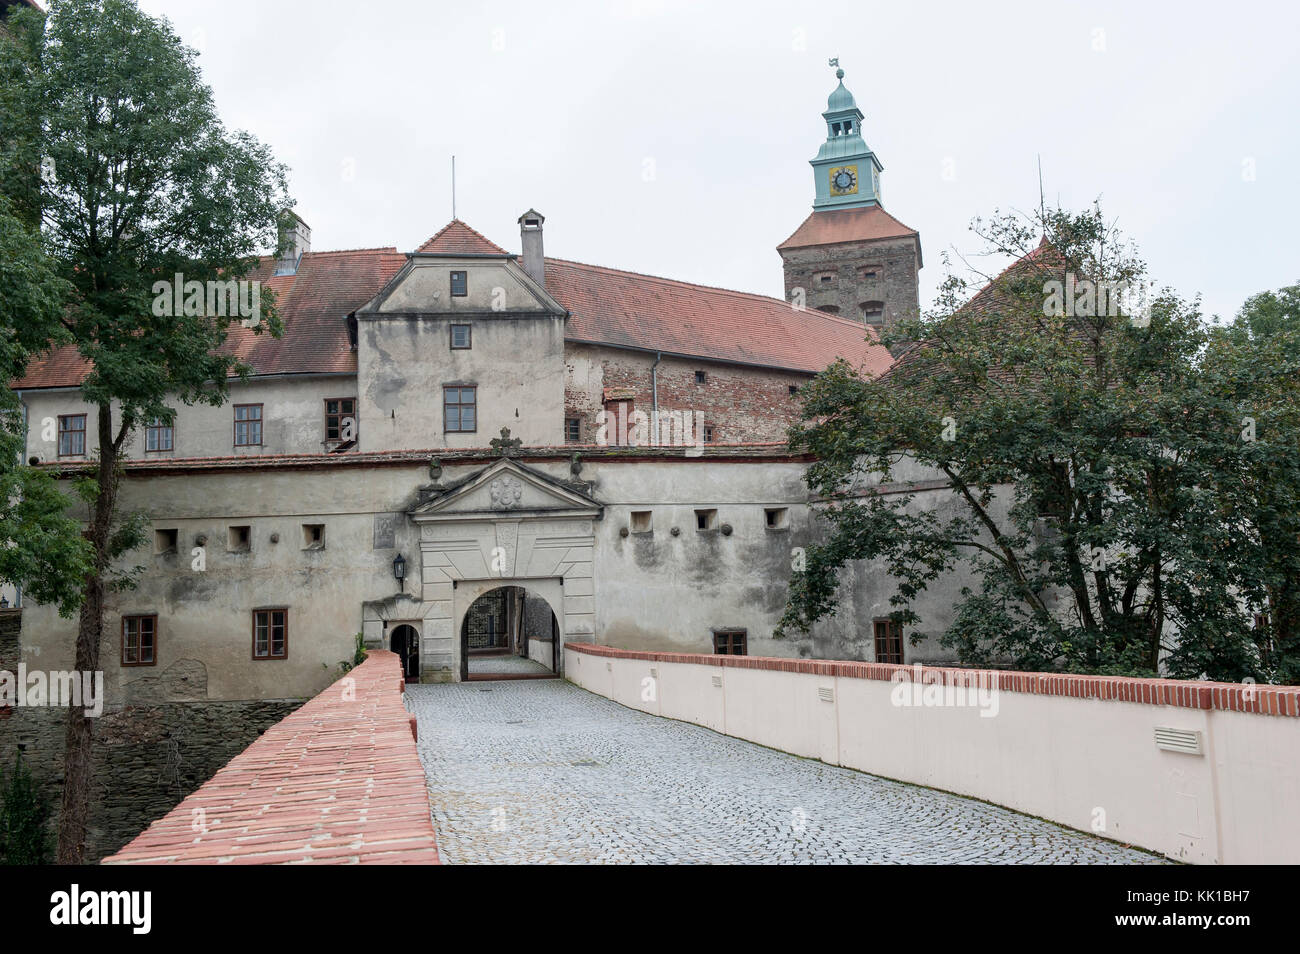 Castle in Stadtschlaining, Oberwart District, Burgenland, Austria Stock Photo